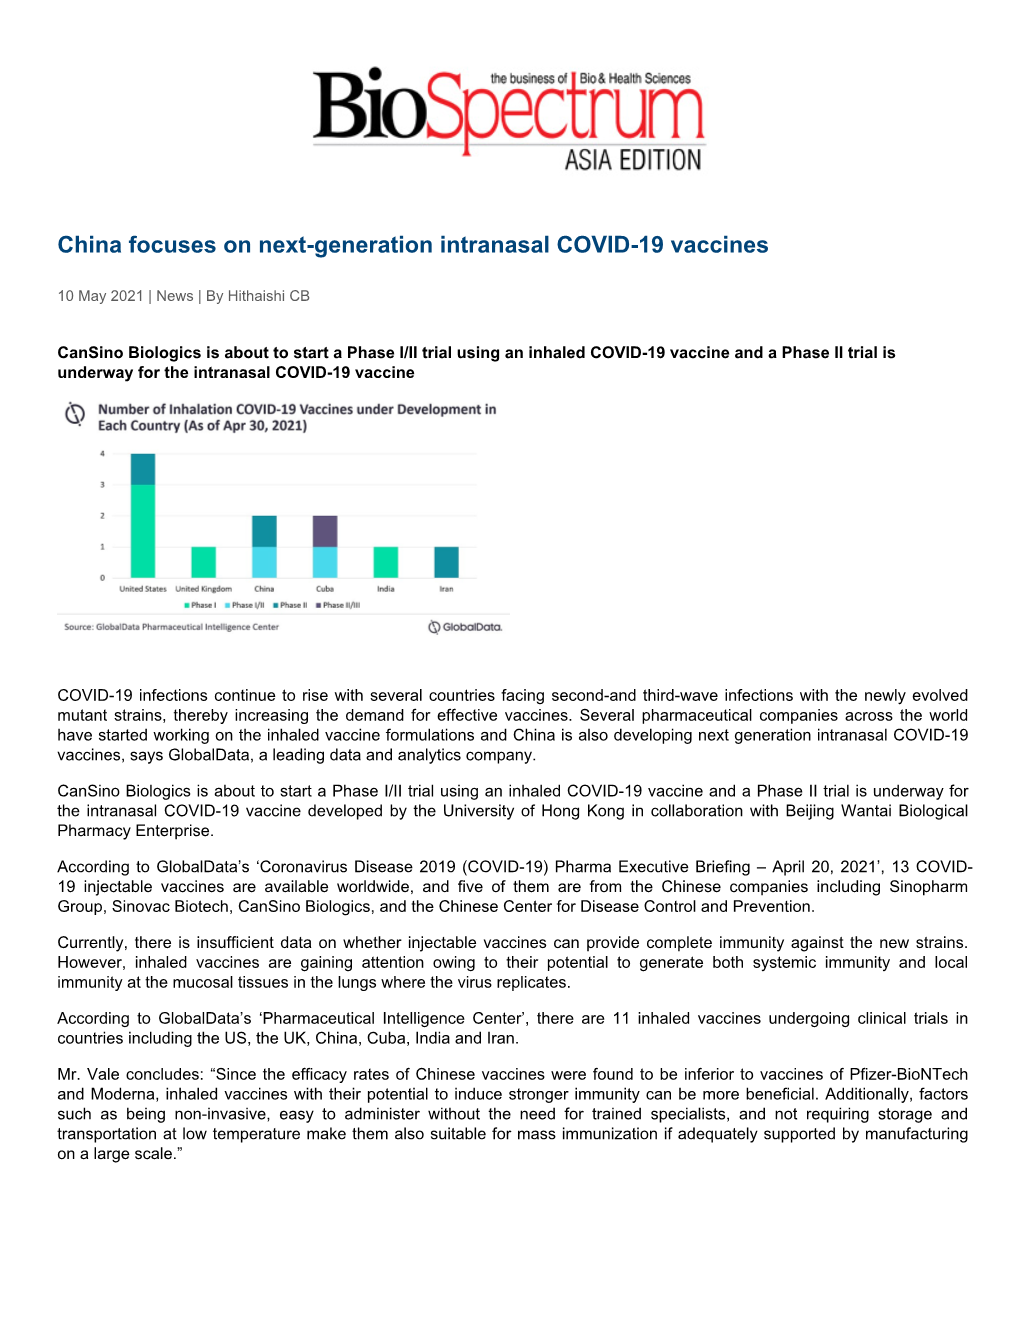 China Focuses on Next-Generation Intranasal COVID-19 Vaccines